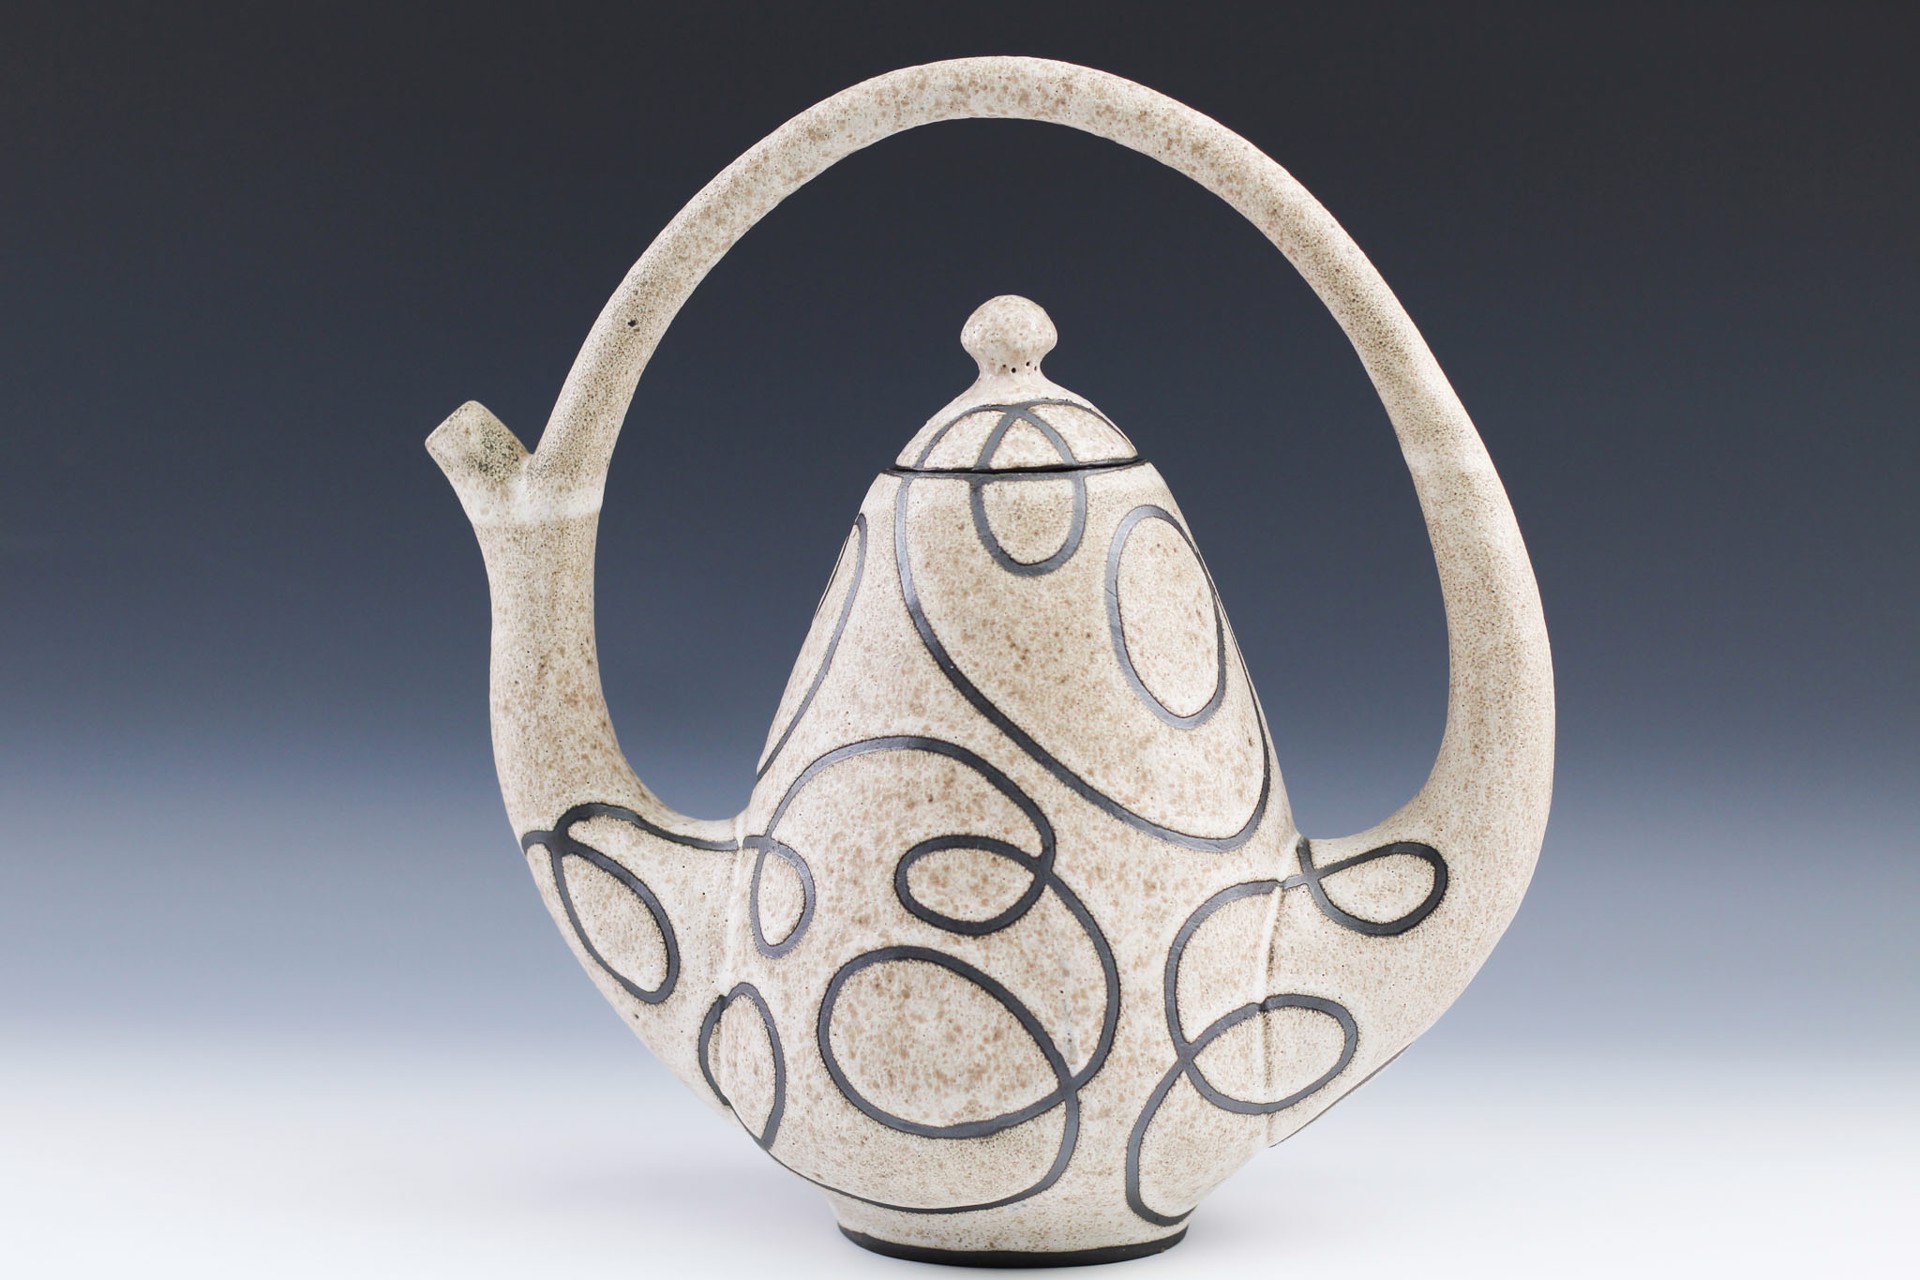 Teapot by Margaret Bohls